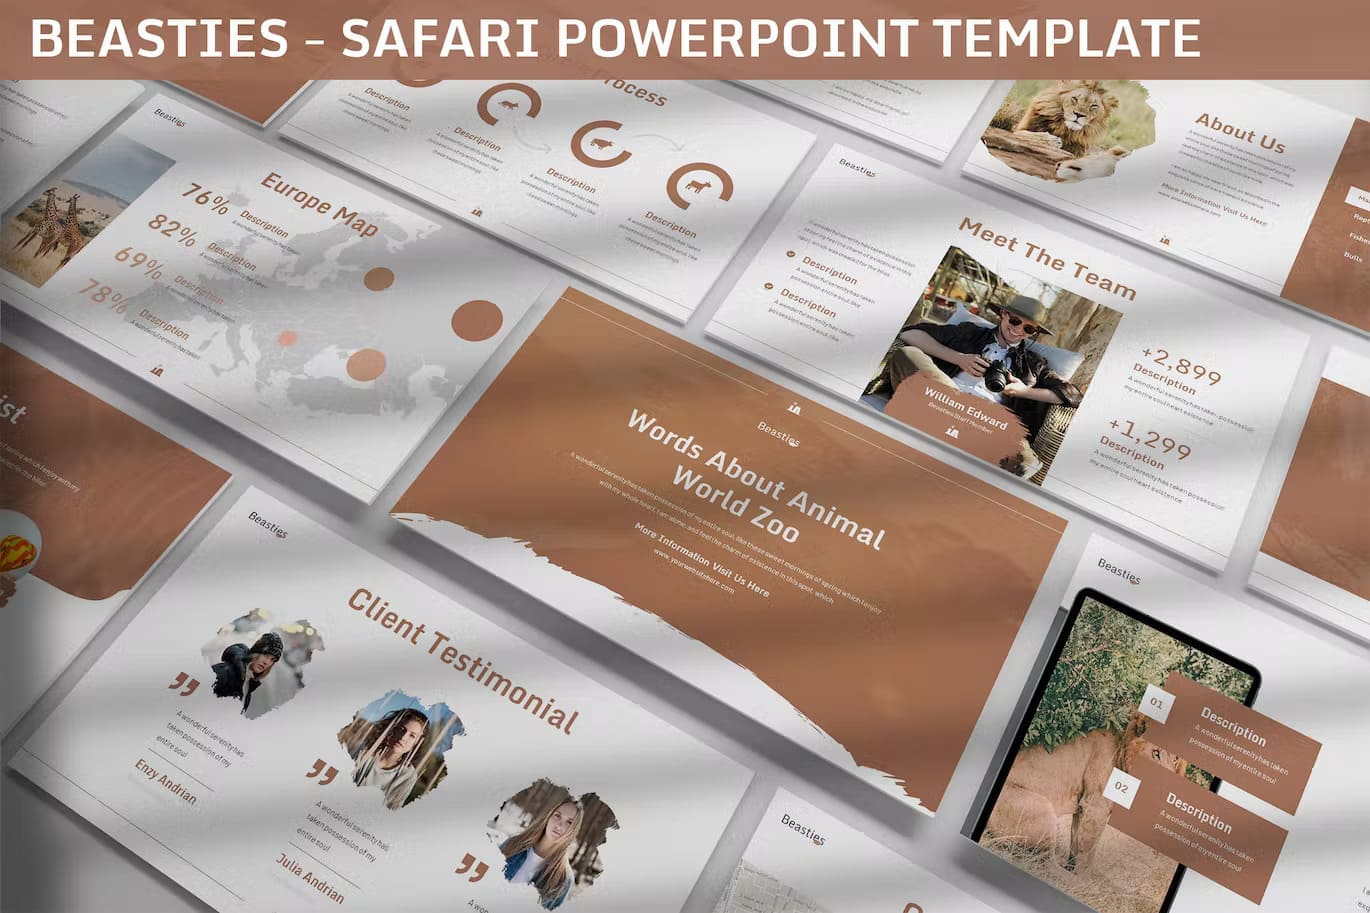 Information about Beasties safari powerpoint template.